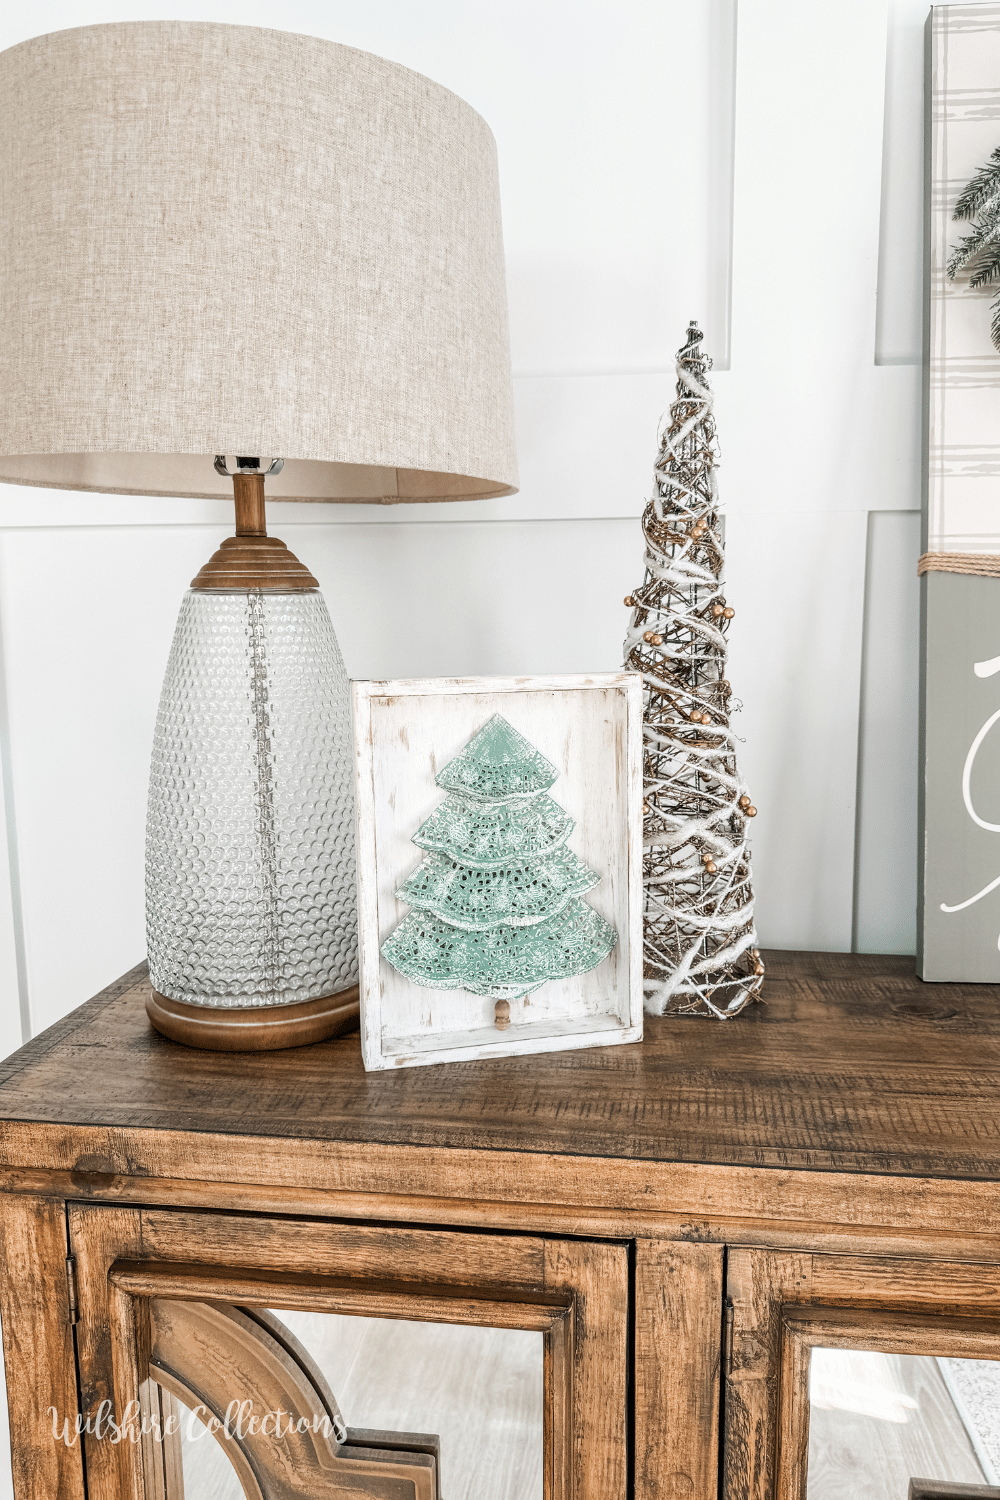 Dollar Tree Christmas DIY using paper doilies